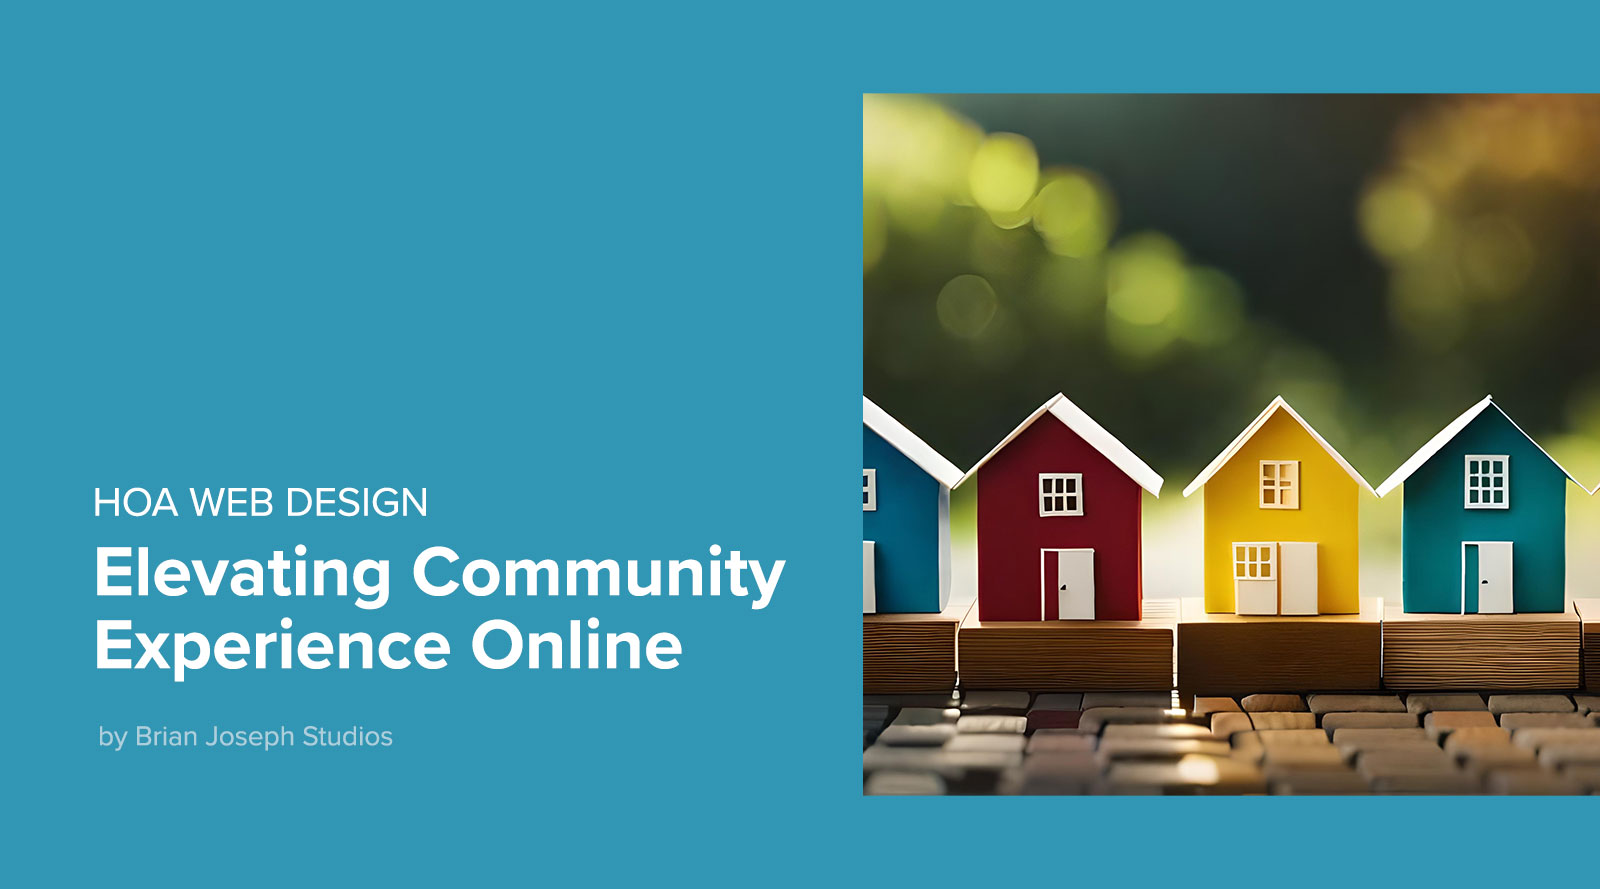 HOA Web Design - Elevating Community Experience Online